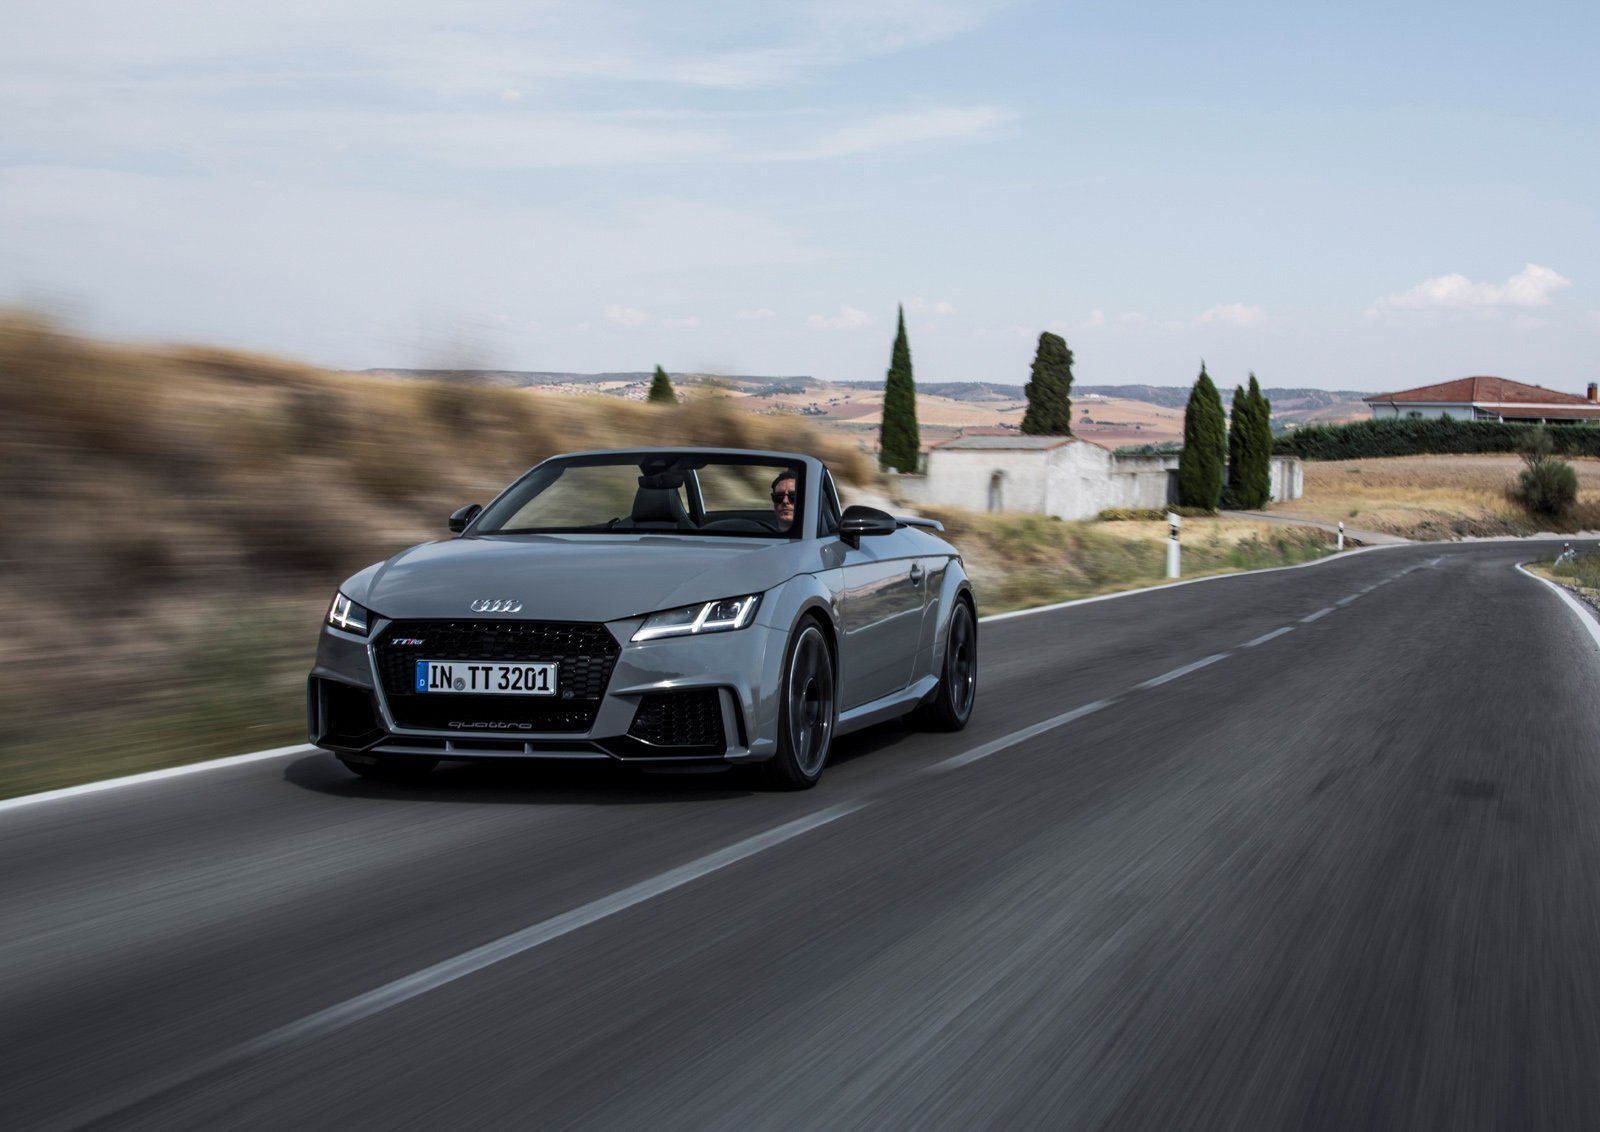 16 Audi Tt Rs Roadster Nardo Grey Cars Wallpapers Hd Desktop And Mobile Backgrounds